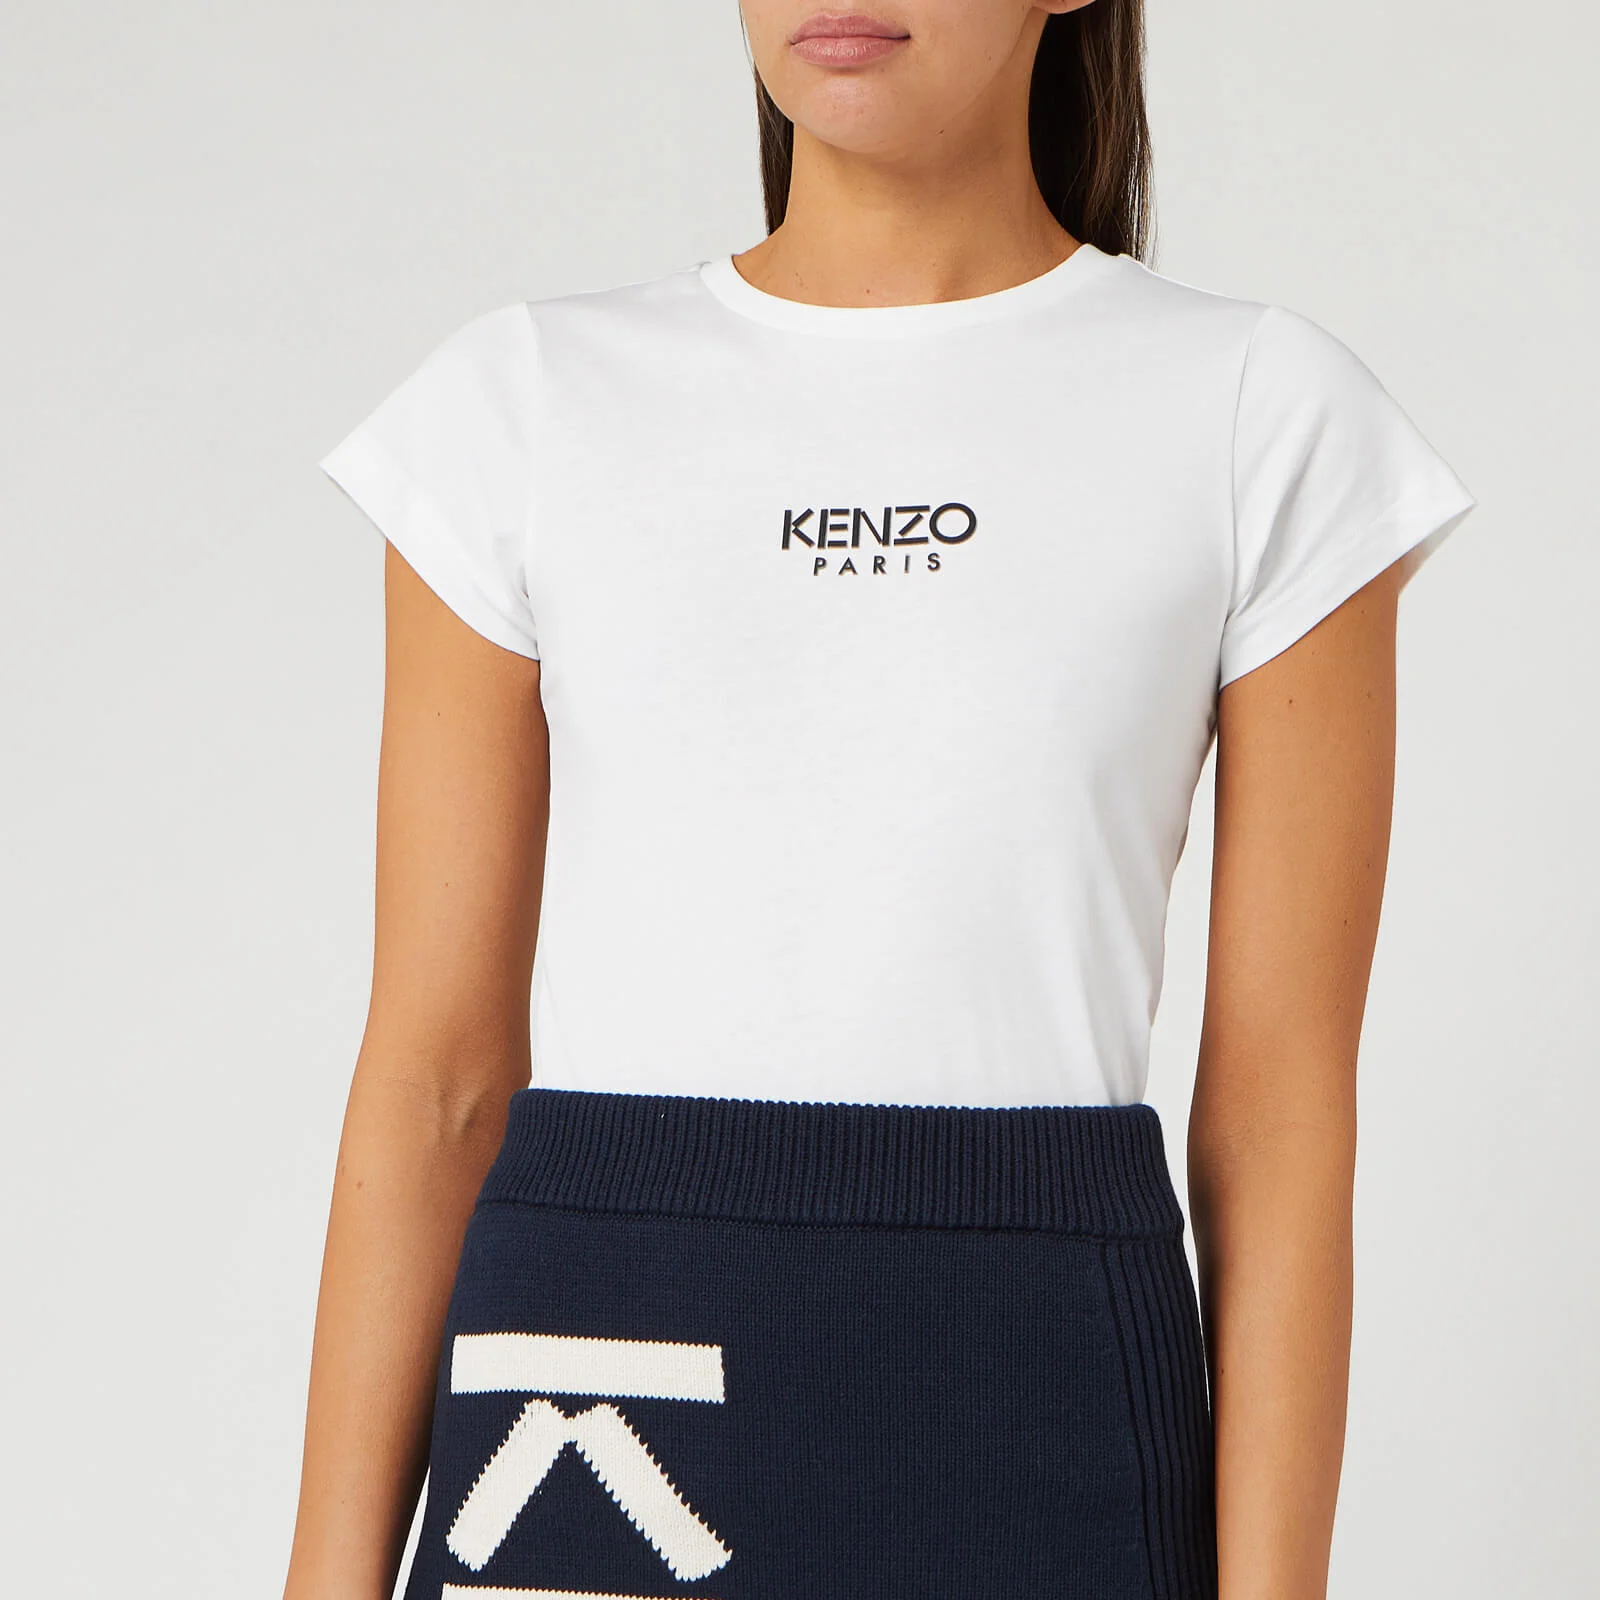 KENZO Women's Essential T-Shirt - White Image 1